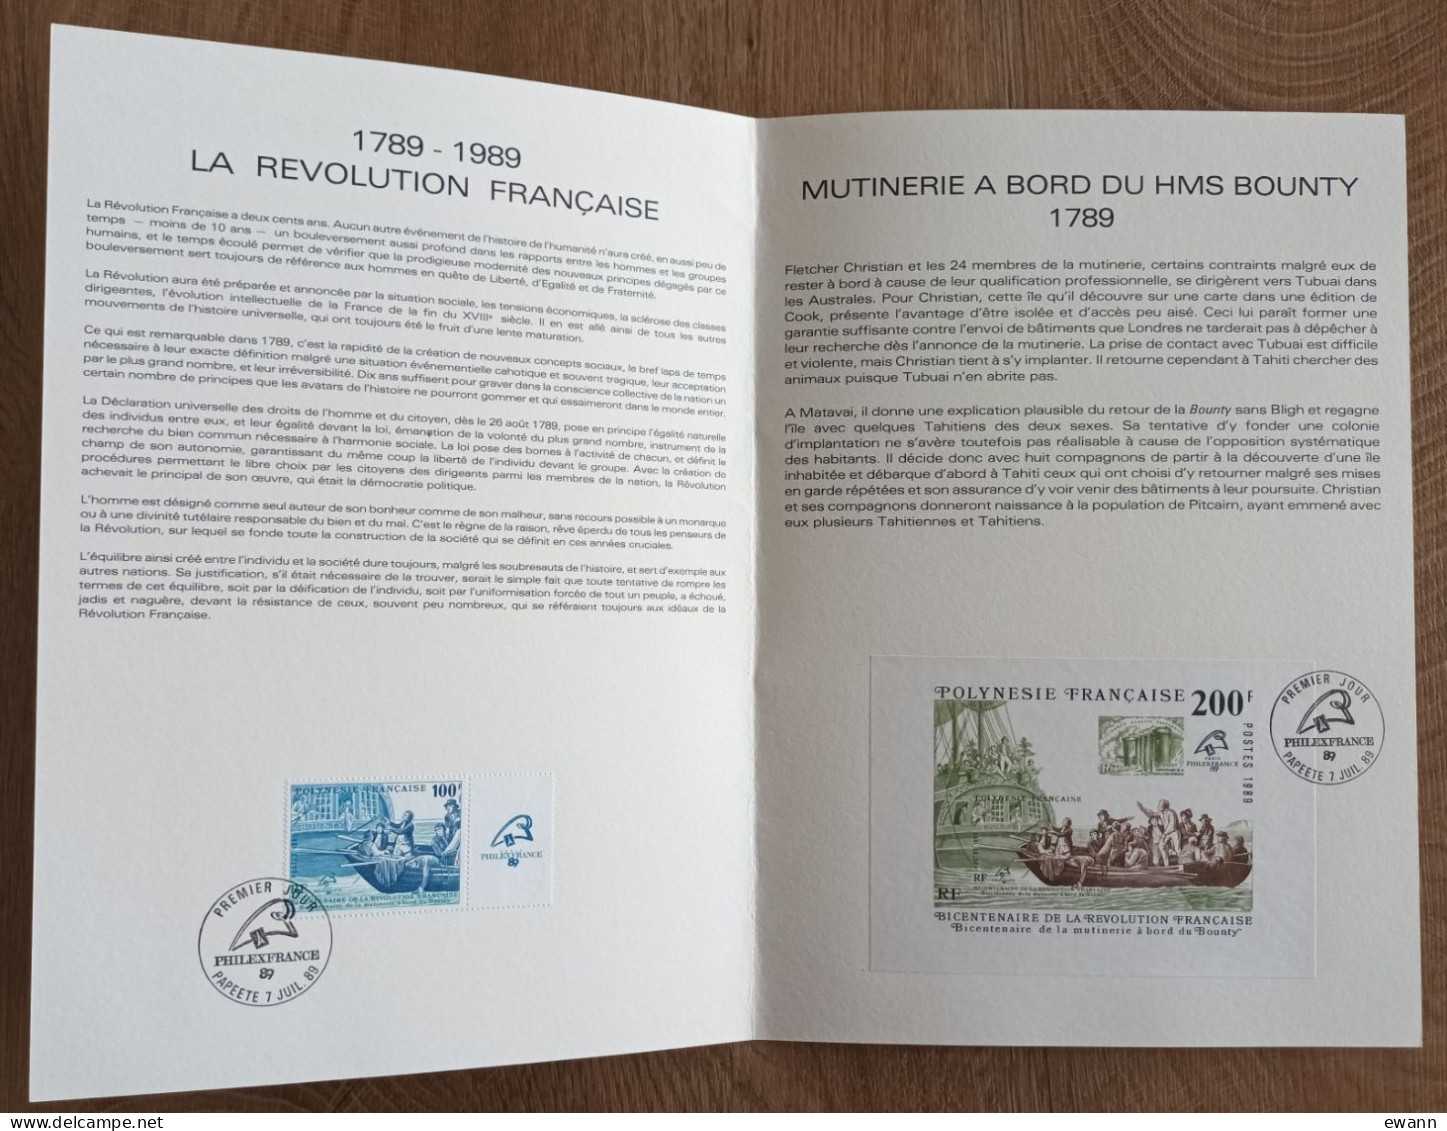 Polynésie Française - FDC Sur Document - YT N°336 + BF 15 - REVOLUTION FRANCAISE / MUTINERIE DU BOUNTY - 1989 - FDC